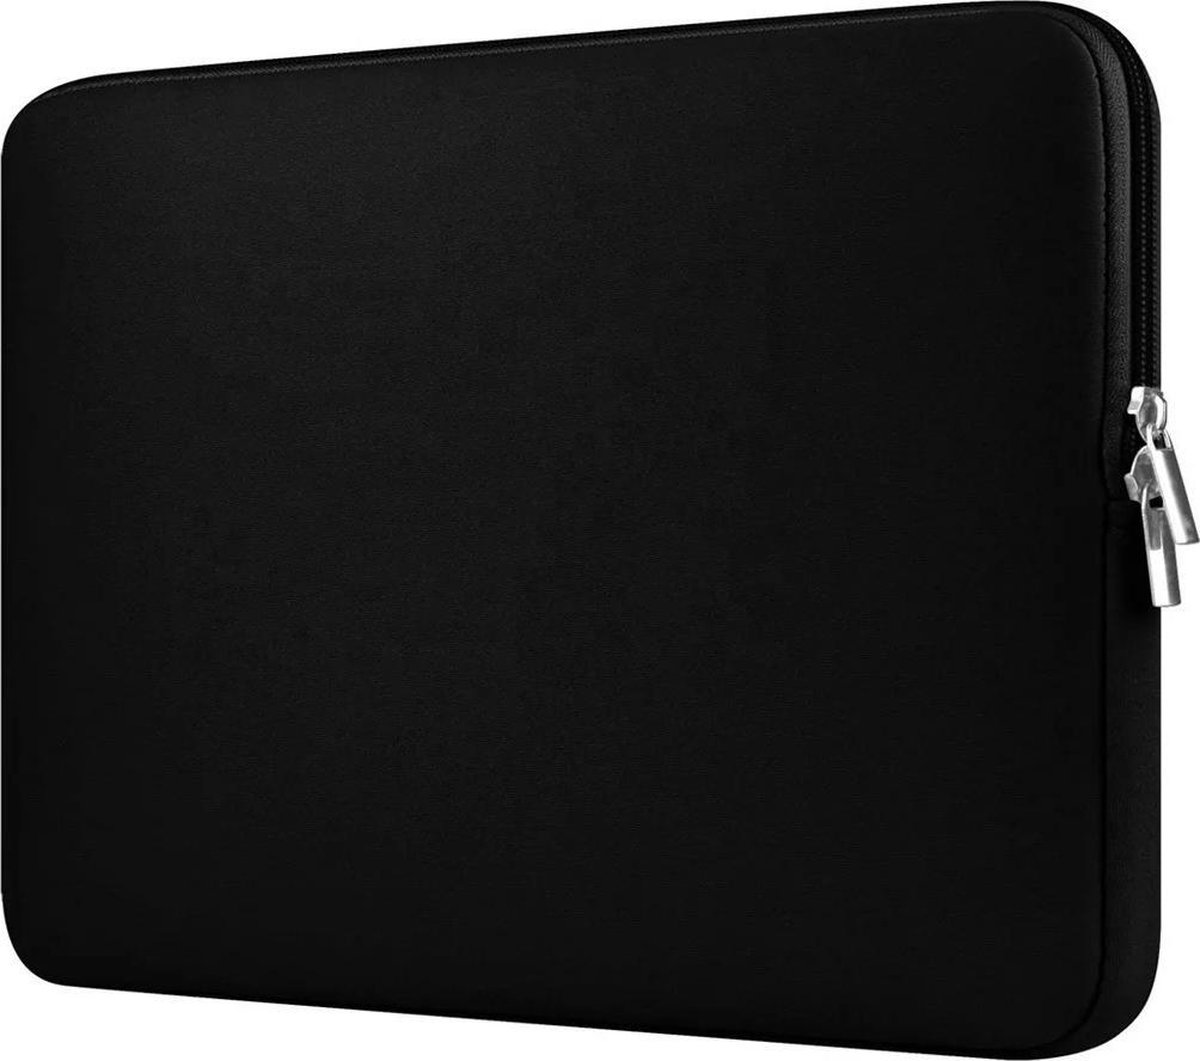 Spatwaterdichte laptopsleeve – 15,6 inch- dubbele ritssluiting- zwarte kleur - unisex - spatwaterbestending